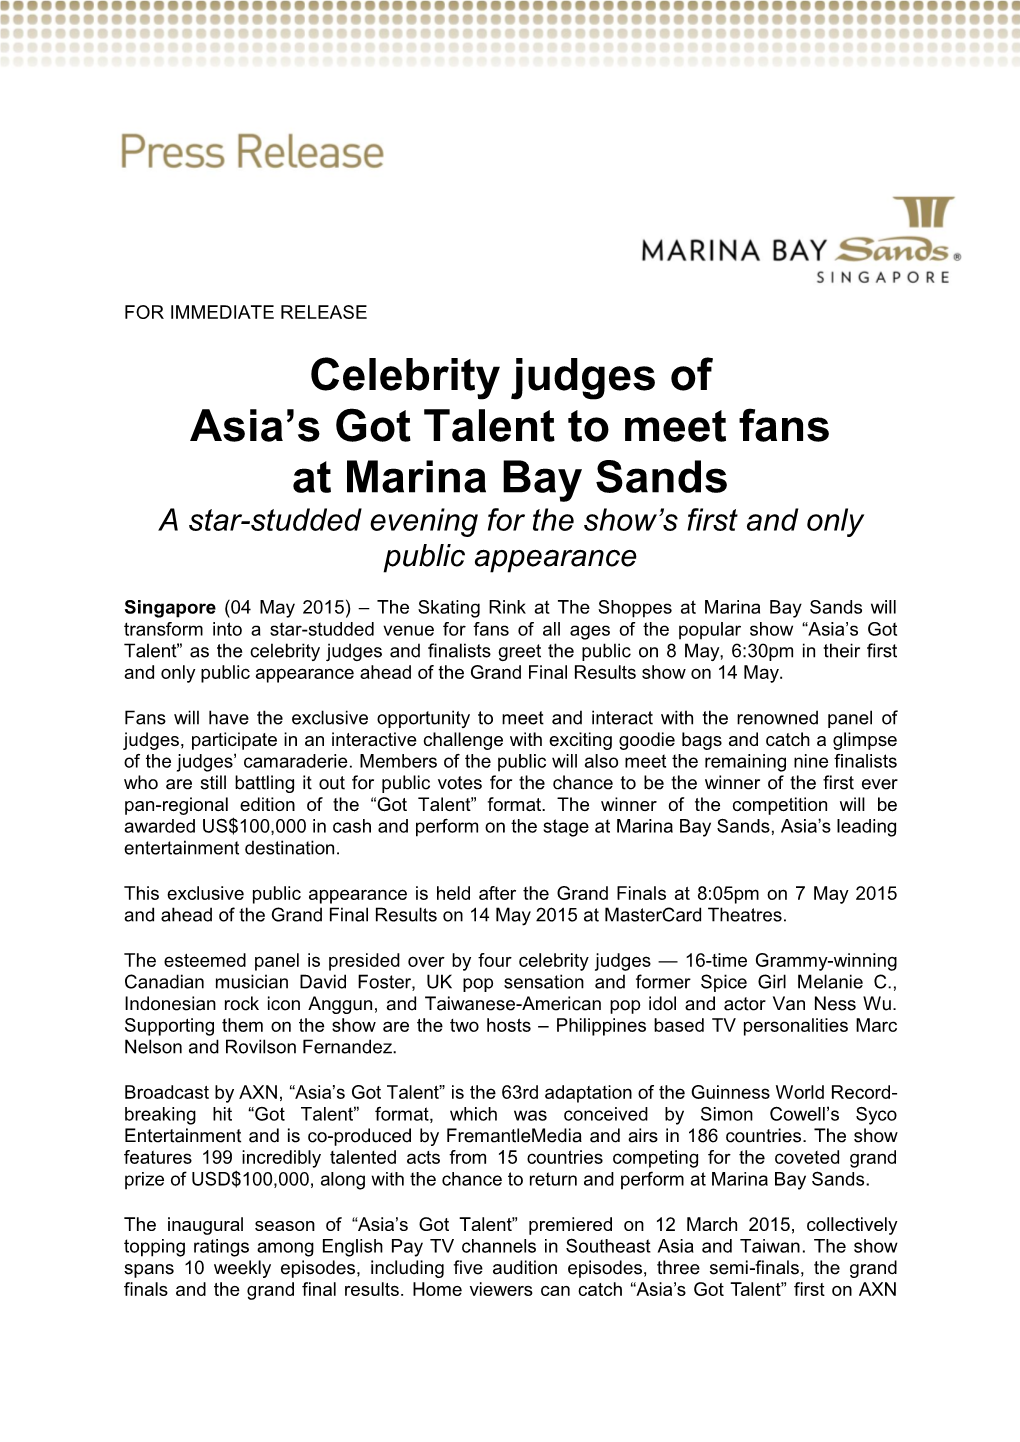 Celebrity Judges of Asia's Got Talent to Meet Fans at Marina Bay Sands